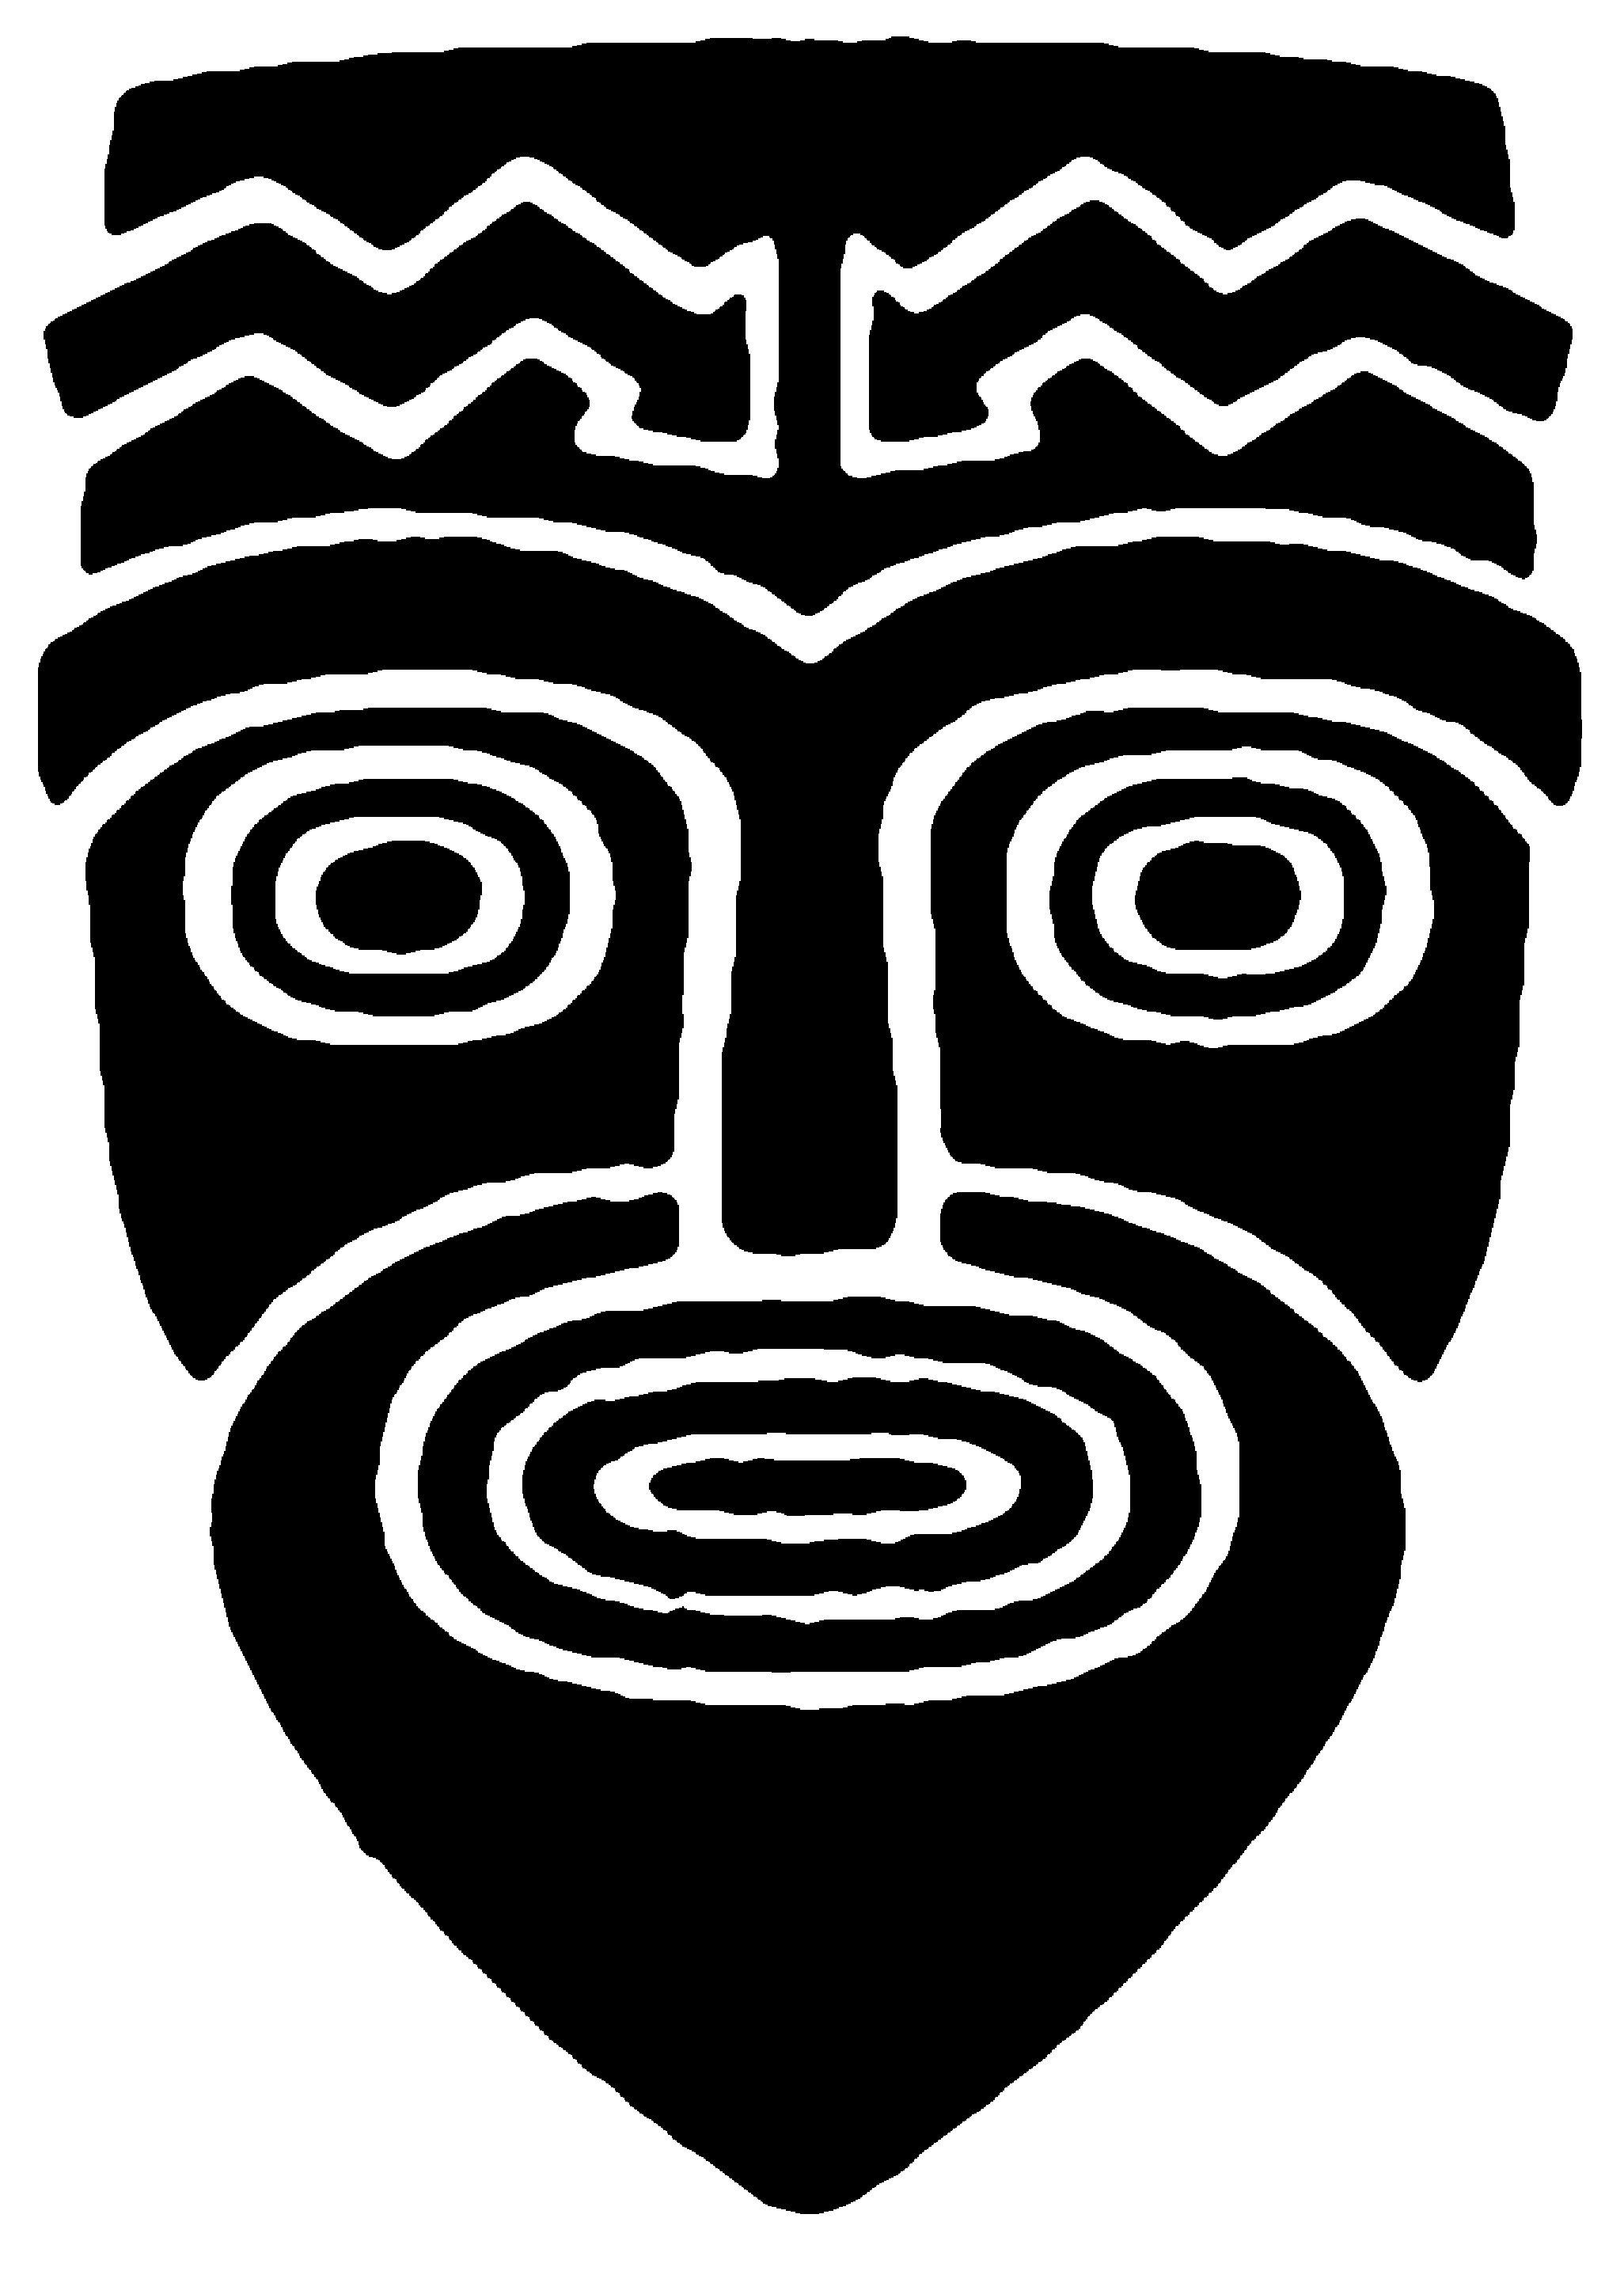 File:KON-TIKI logo - Wikimedia Commons